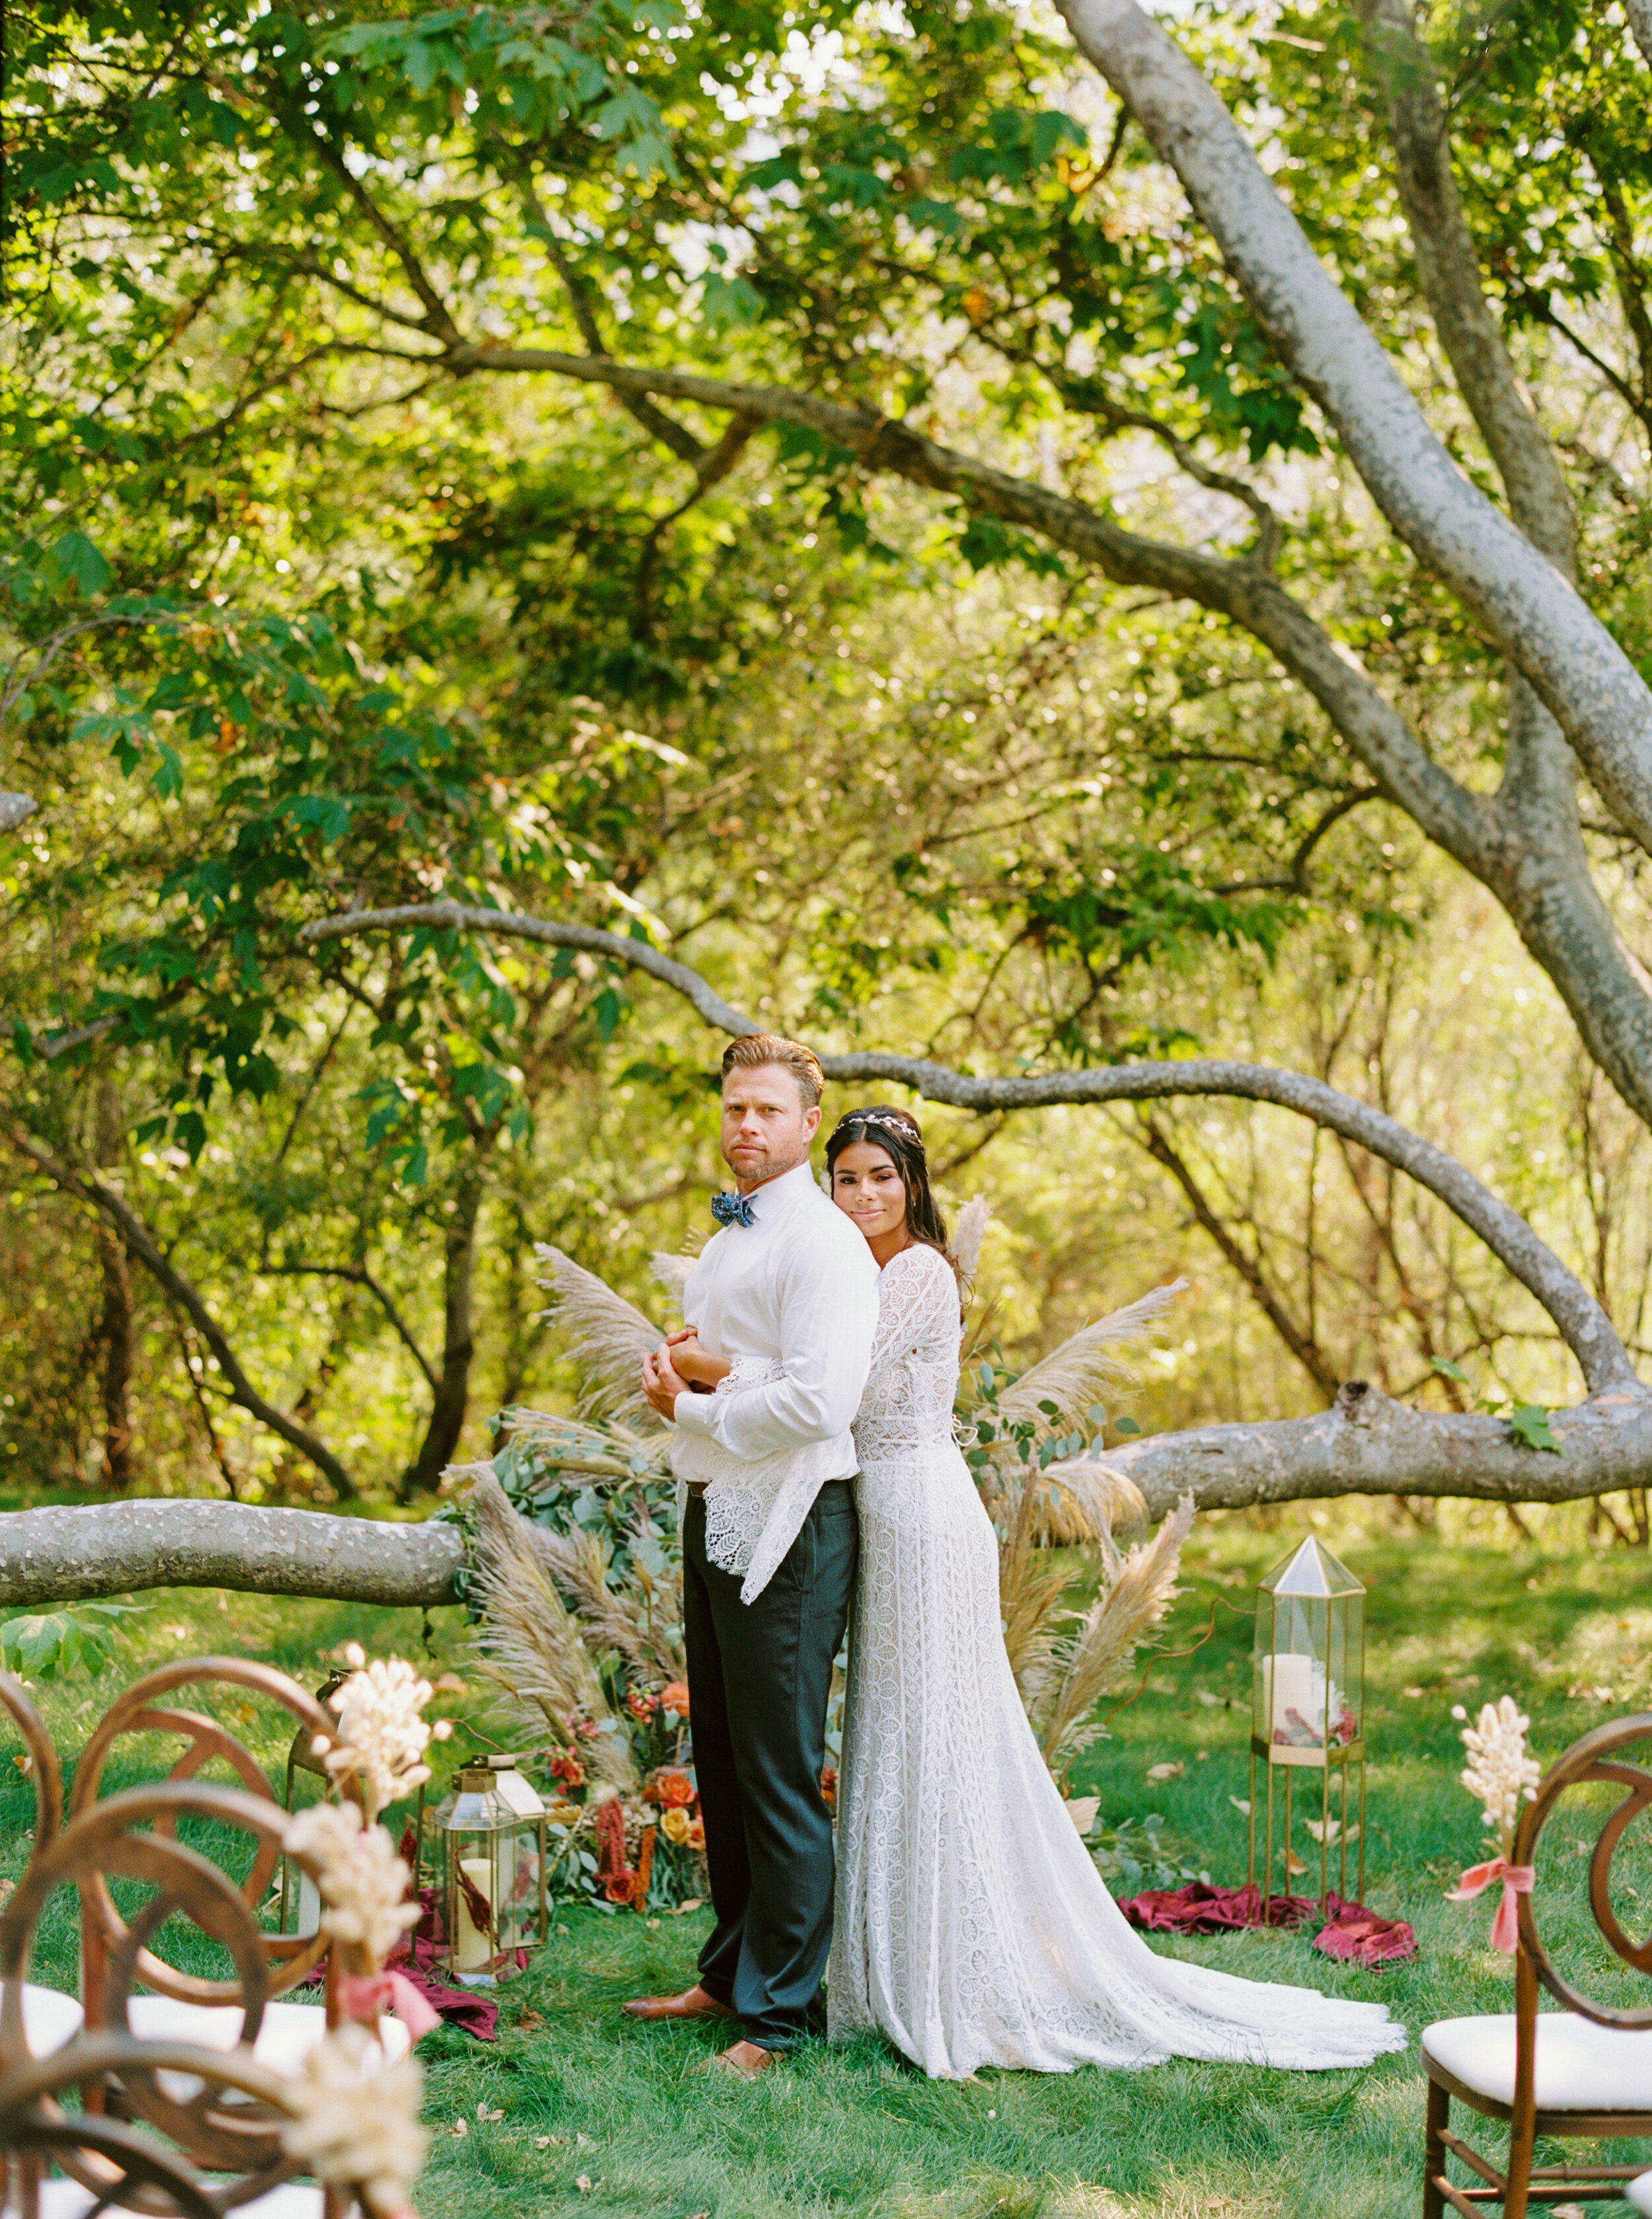 Sarahi Hadden - An Earthy Summer Boho Inspired Wedding with Sunset Hues at Gardener Ranch-115.jpg